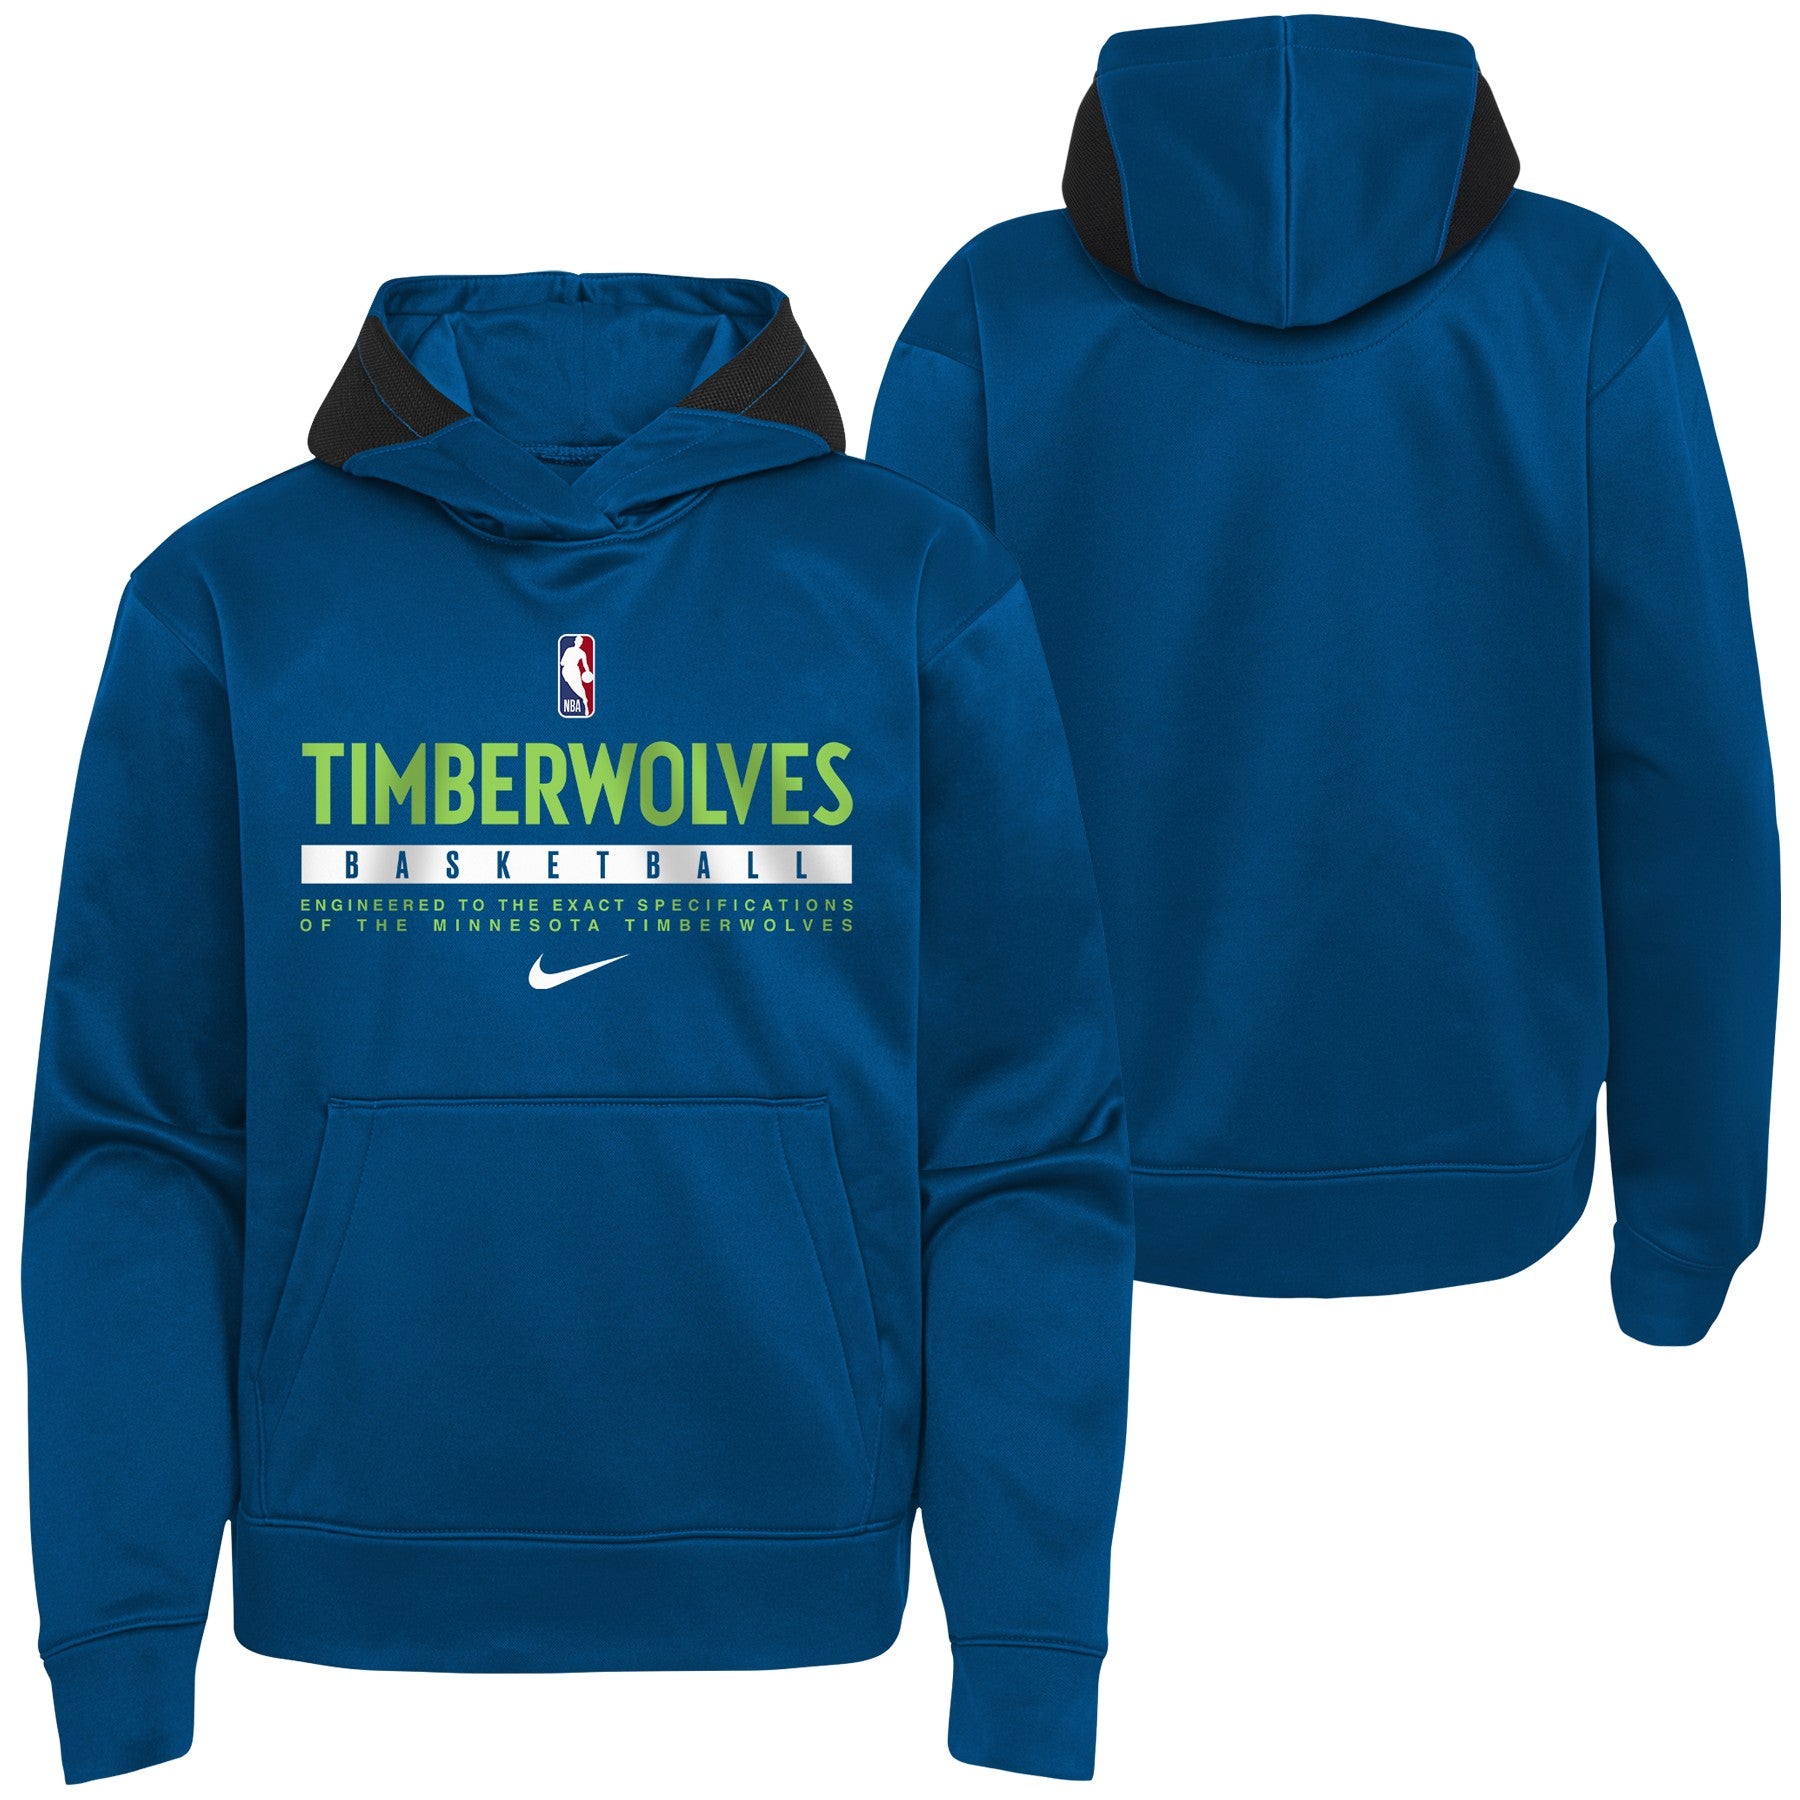 Minnesota Timberwolves Hoodie, Timberwolves Sweatshirts, Timberwolves  Fleece